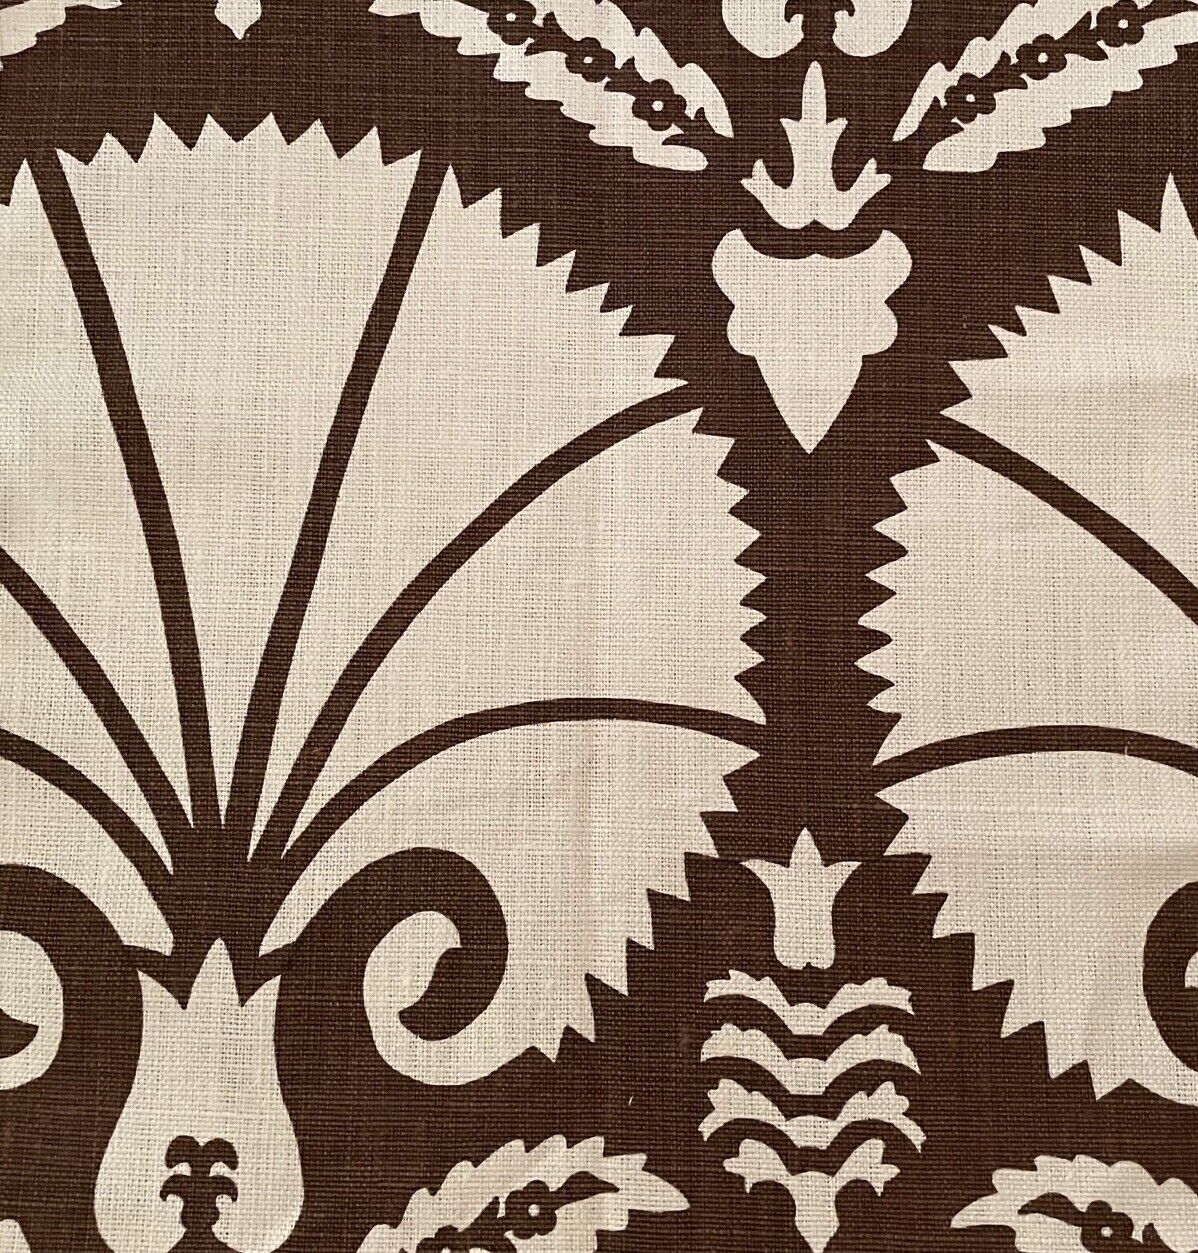 PAOLO MOSCHINO/LEE JOFA Bursa printed linen brown Turkish motif remnant